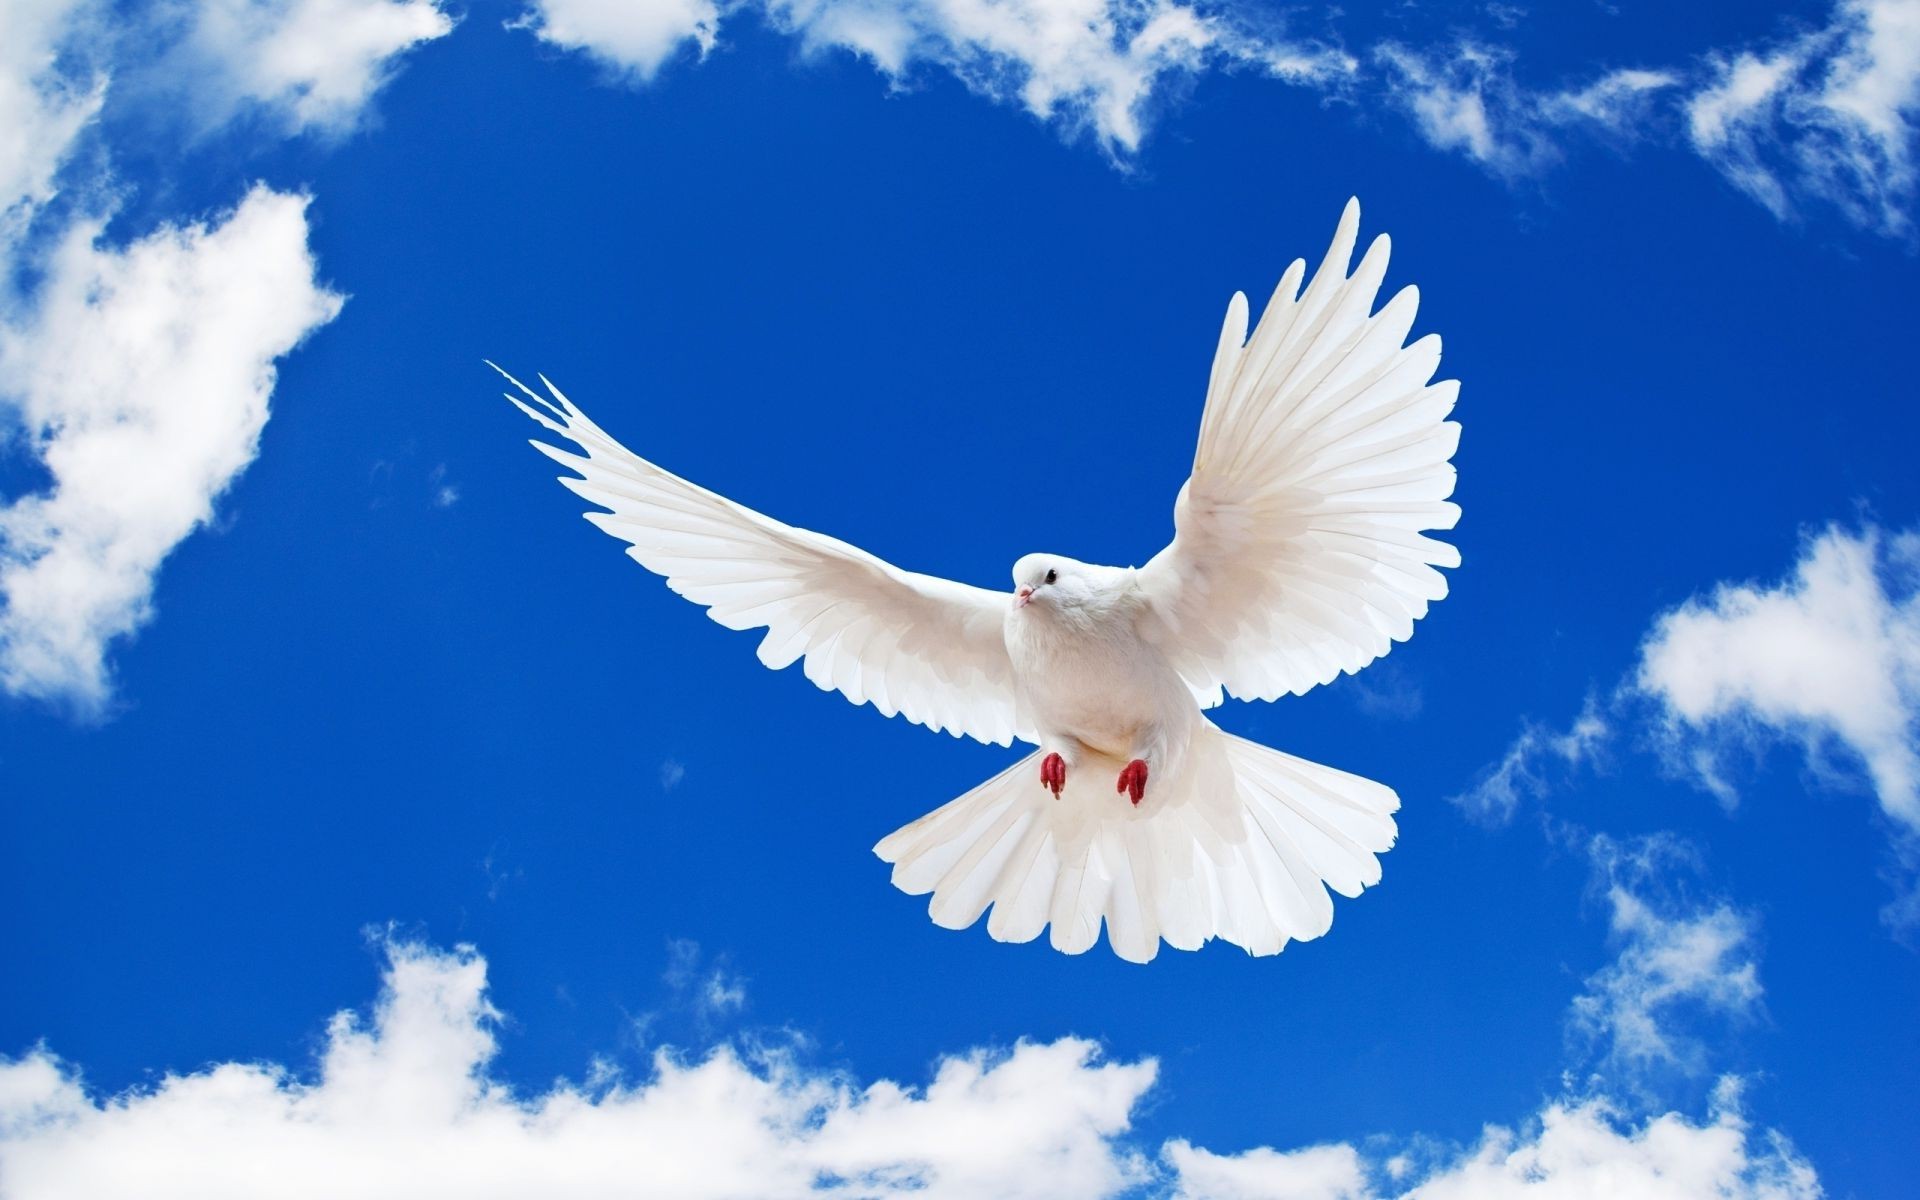 animals bird nature freedom flight sky pigeon wing fly seagulls outdoors feather heaven summer wildlife